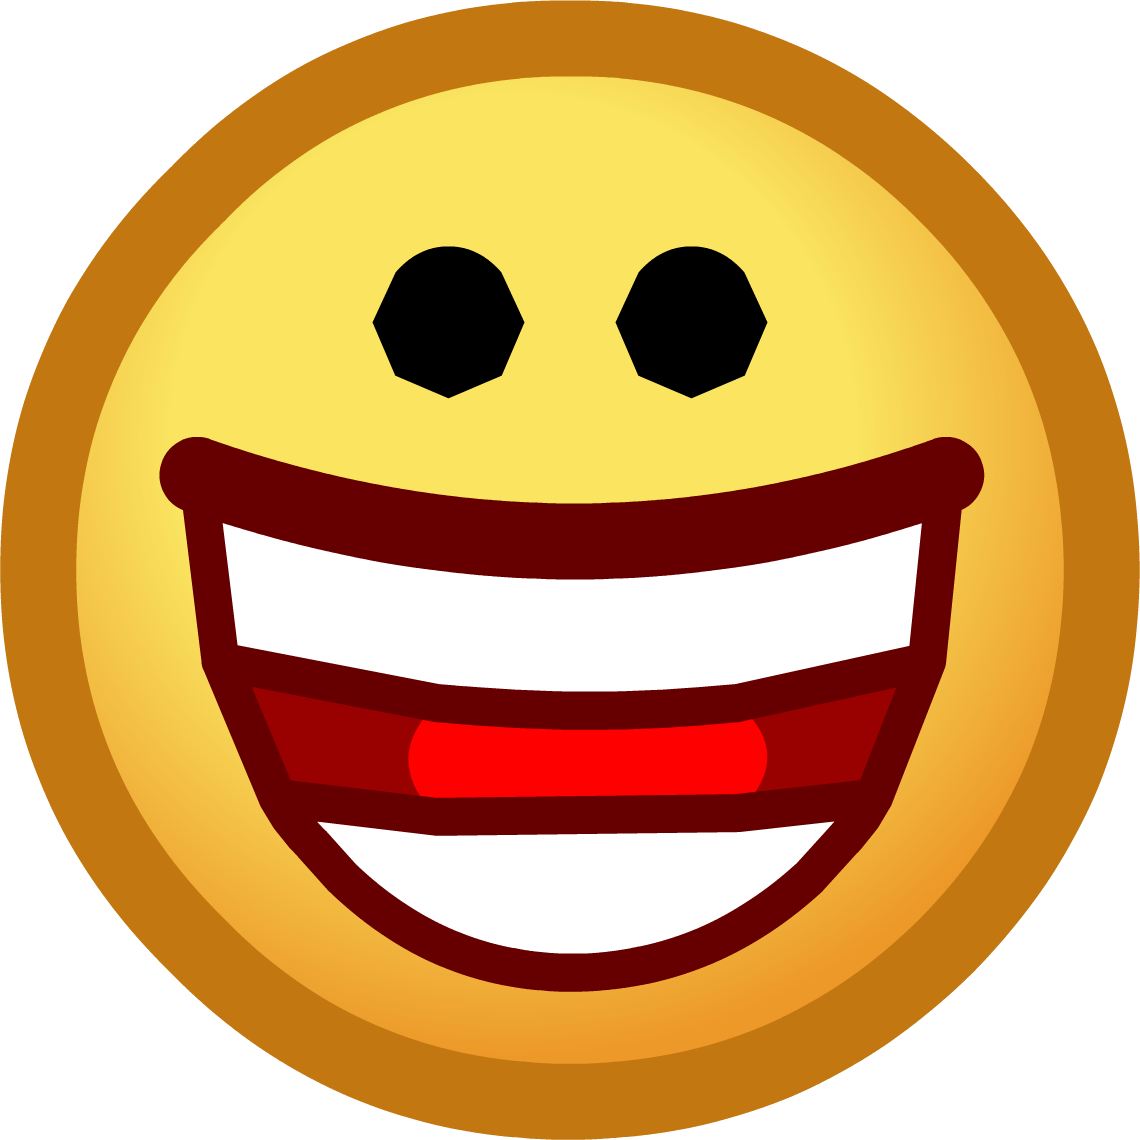 Smile Emoji Face PNG High-Quality Image